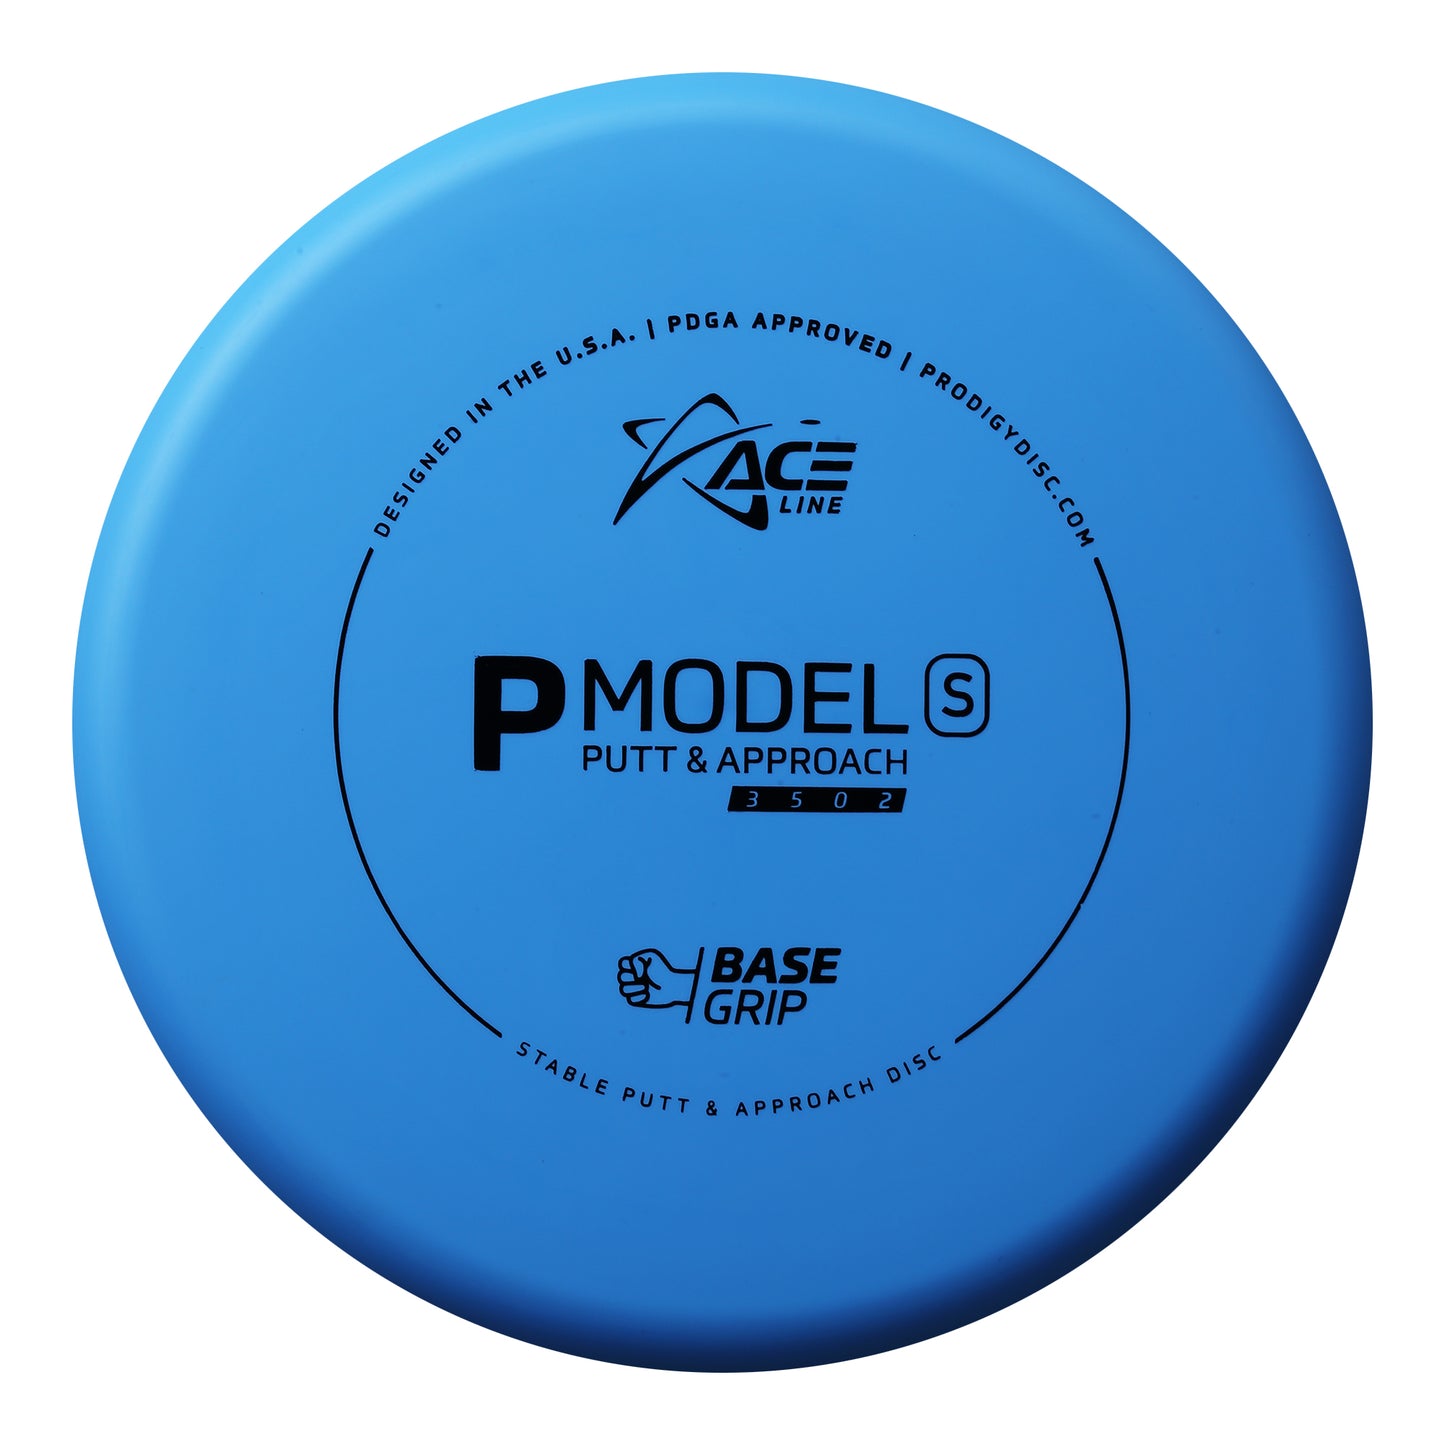 Prodigy Ace Line P Model S Putt & Approach Disc - Basegrip Plastic